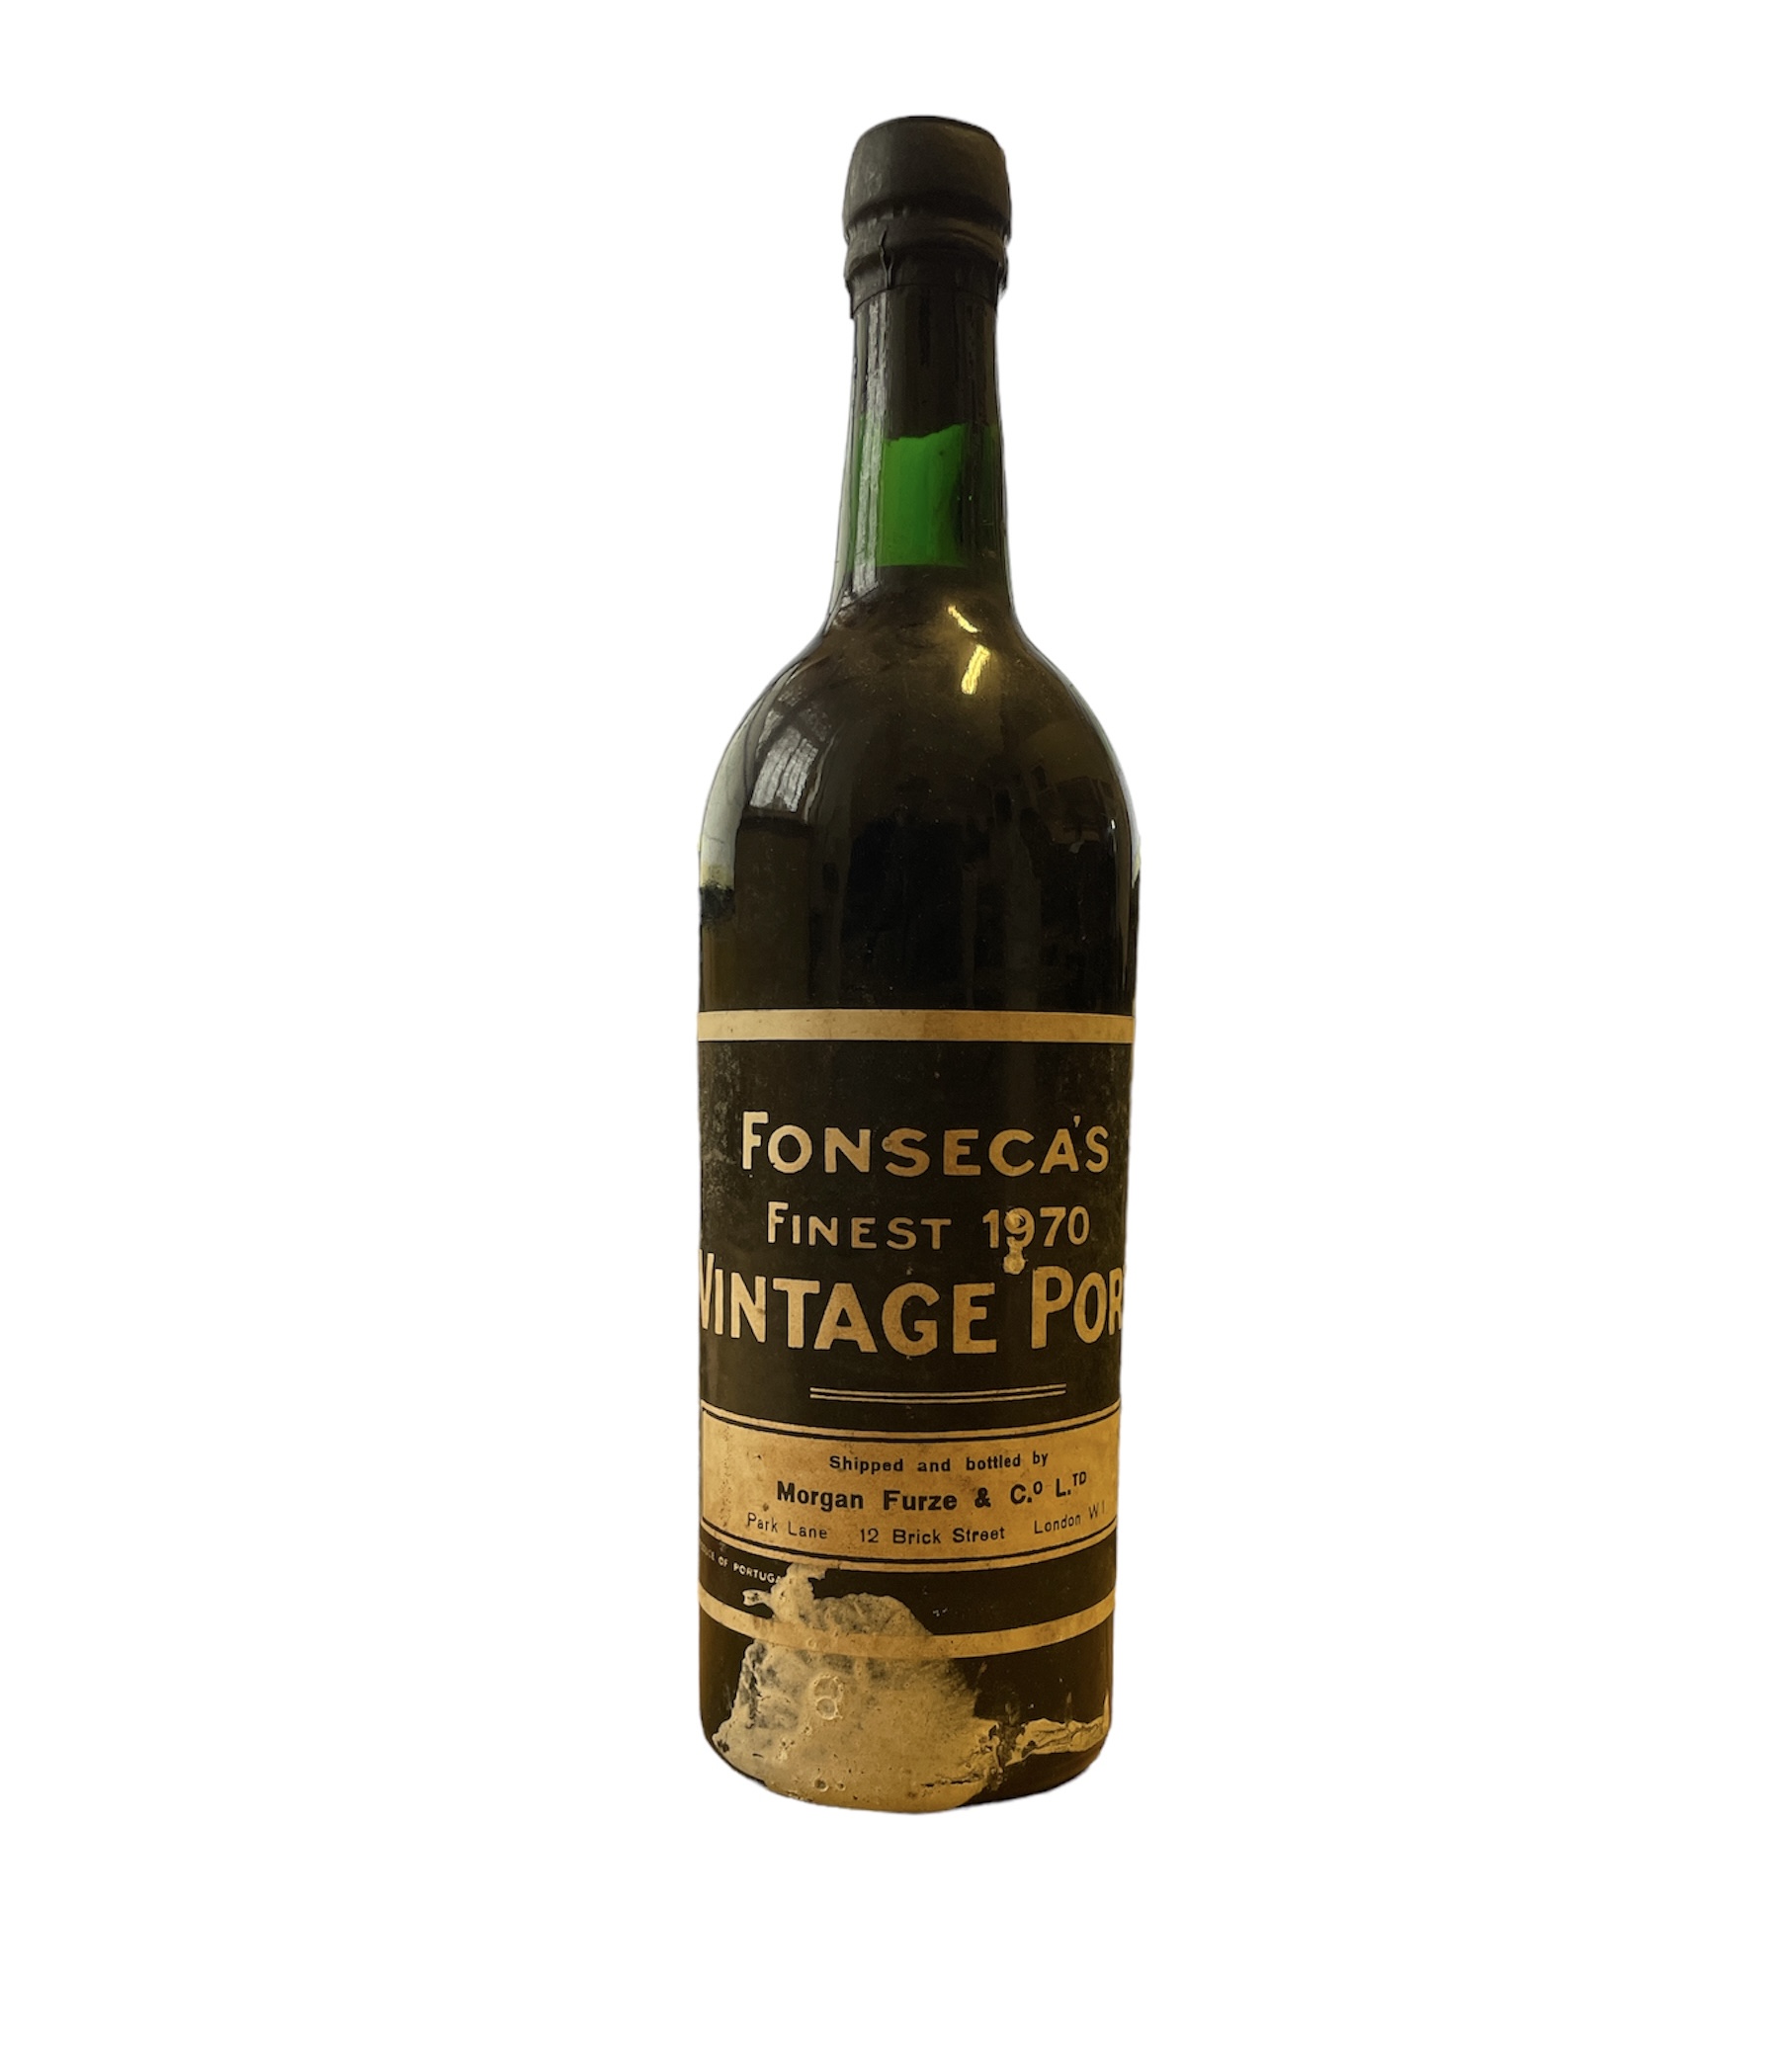 Fonseca's Finest 1970 Vintage Port (port in Base of Neck) Morgan Furze & Co shipped and bottled.